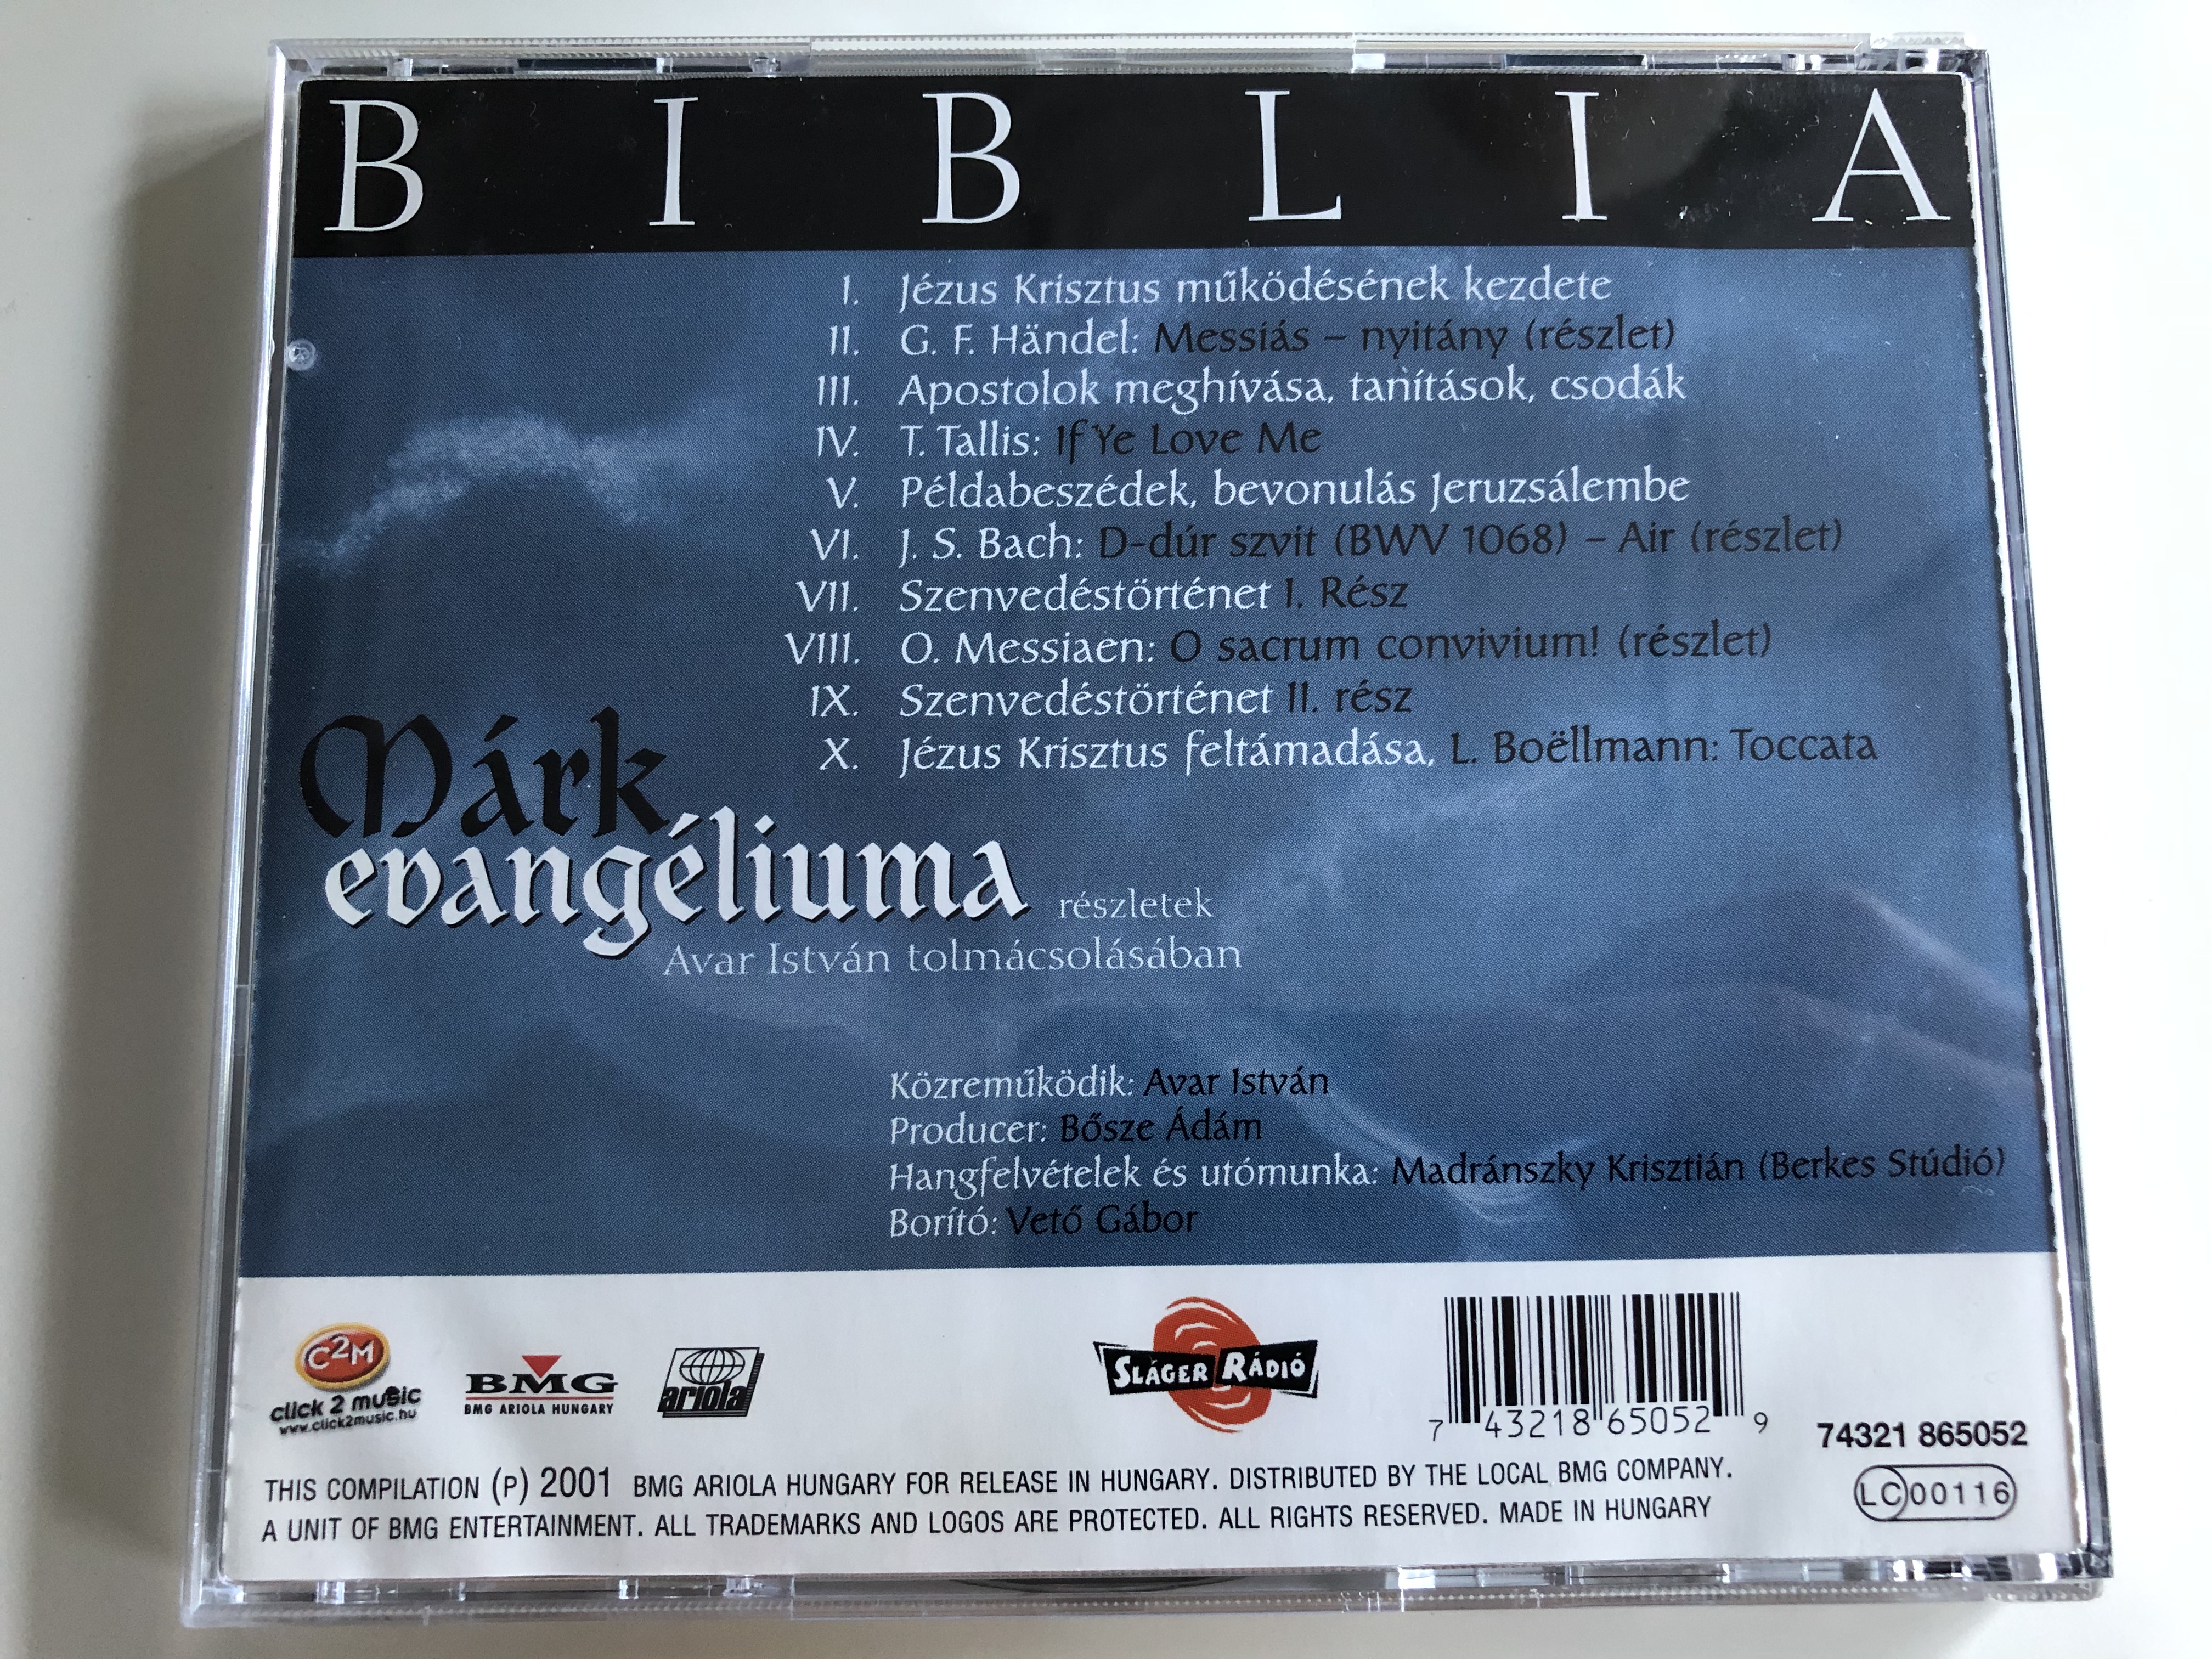 biblia-m-rk-evang-liuma-r-szletek-avar-istv-n-tolm-csol-s-ban-audio-cd-a-magyar-katolikus-p-sp-ki-konferencia-t-mogat-s-val-hungarian-audio-bible-the-gospel-according-to-mark-excerpts-read-by-avar-istv-n-6-.jpg